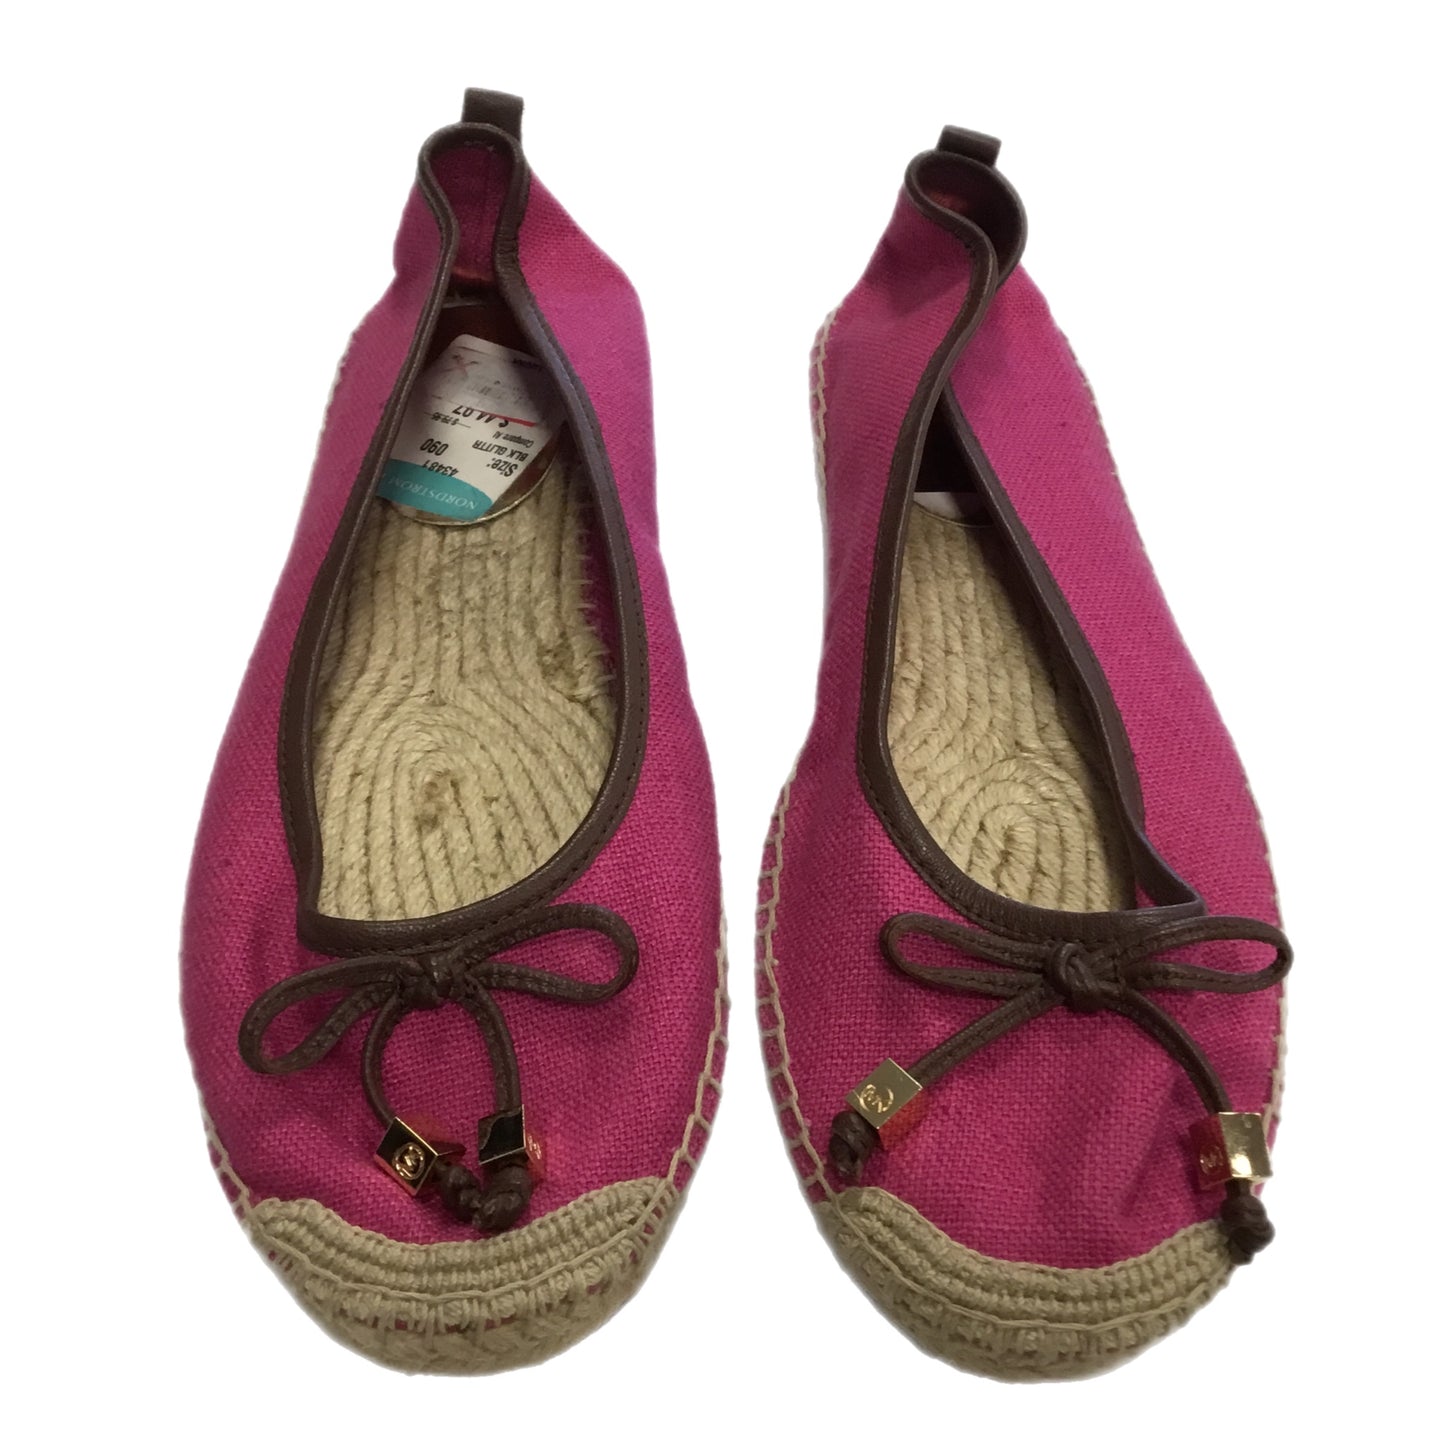 Shoes Flats Espadrille By Michael Kors  Size: 9